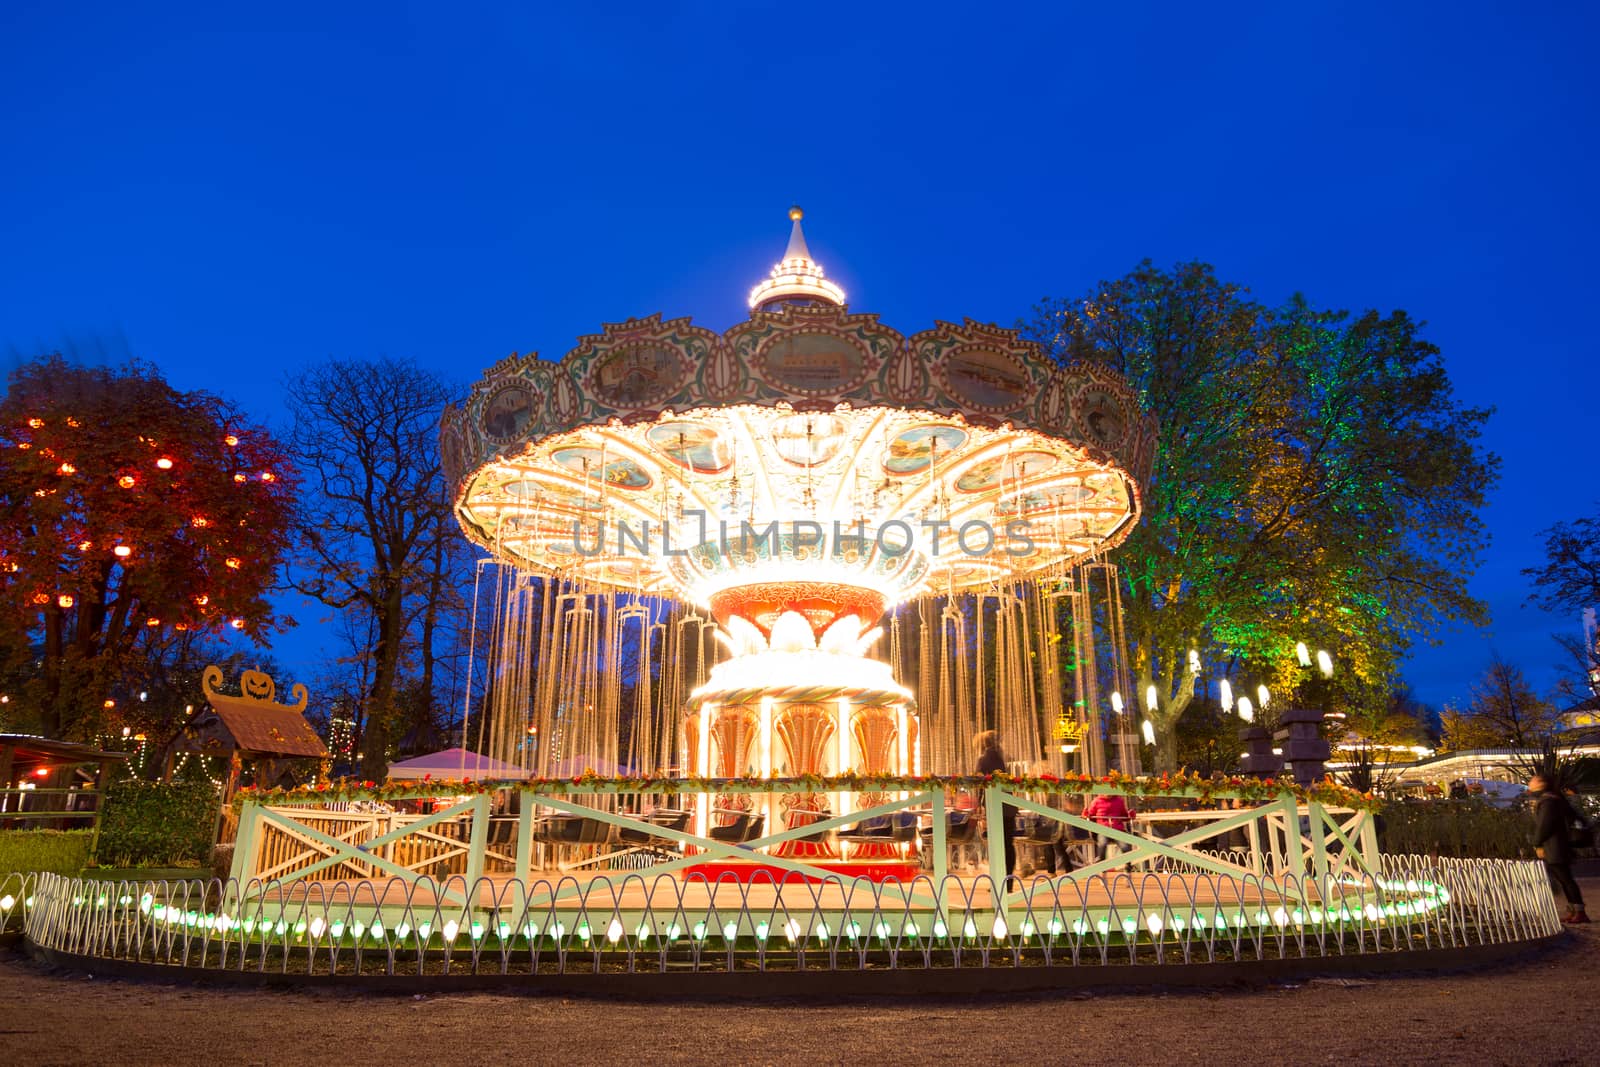 Copenhagen, Denmark -  October 26, 2017: An illuminated carousel in an amusement park at night